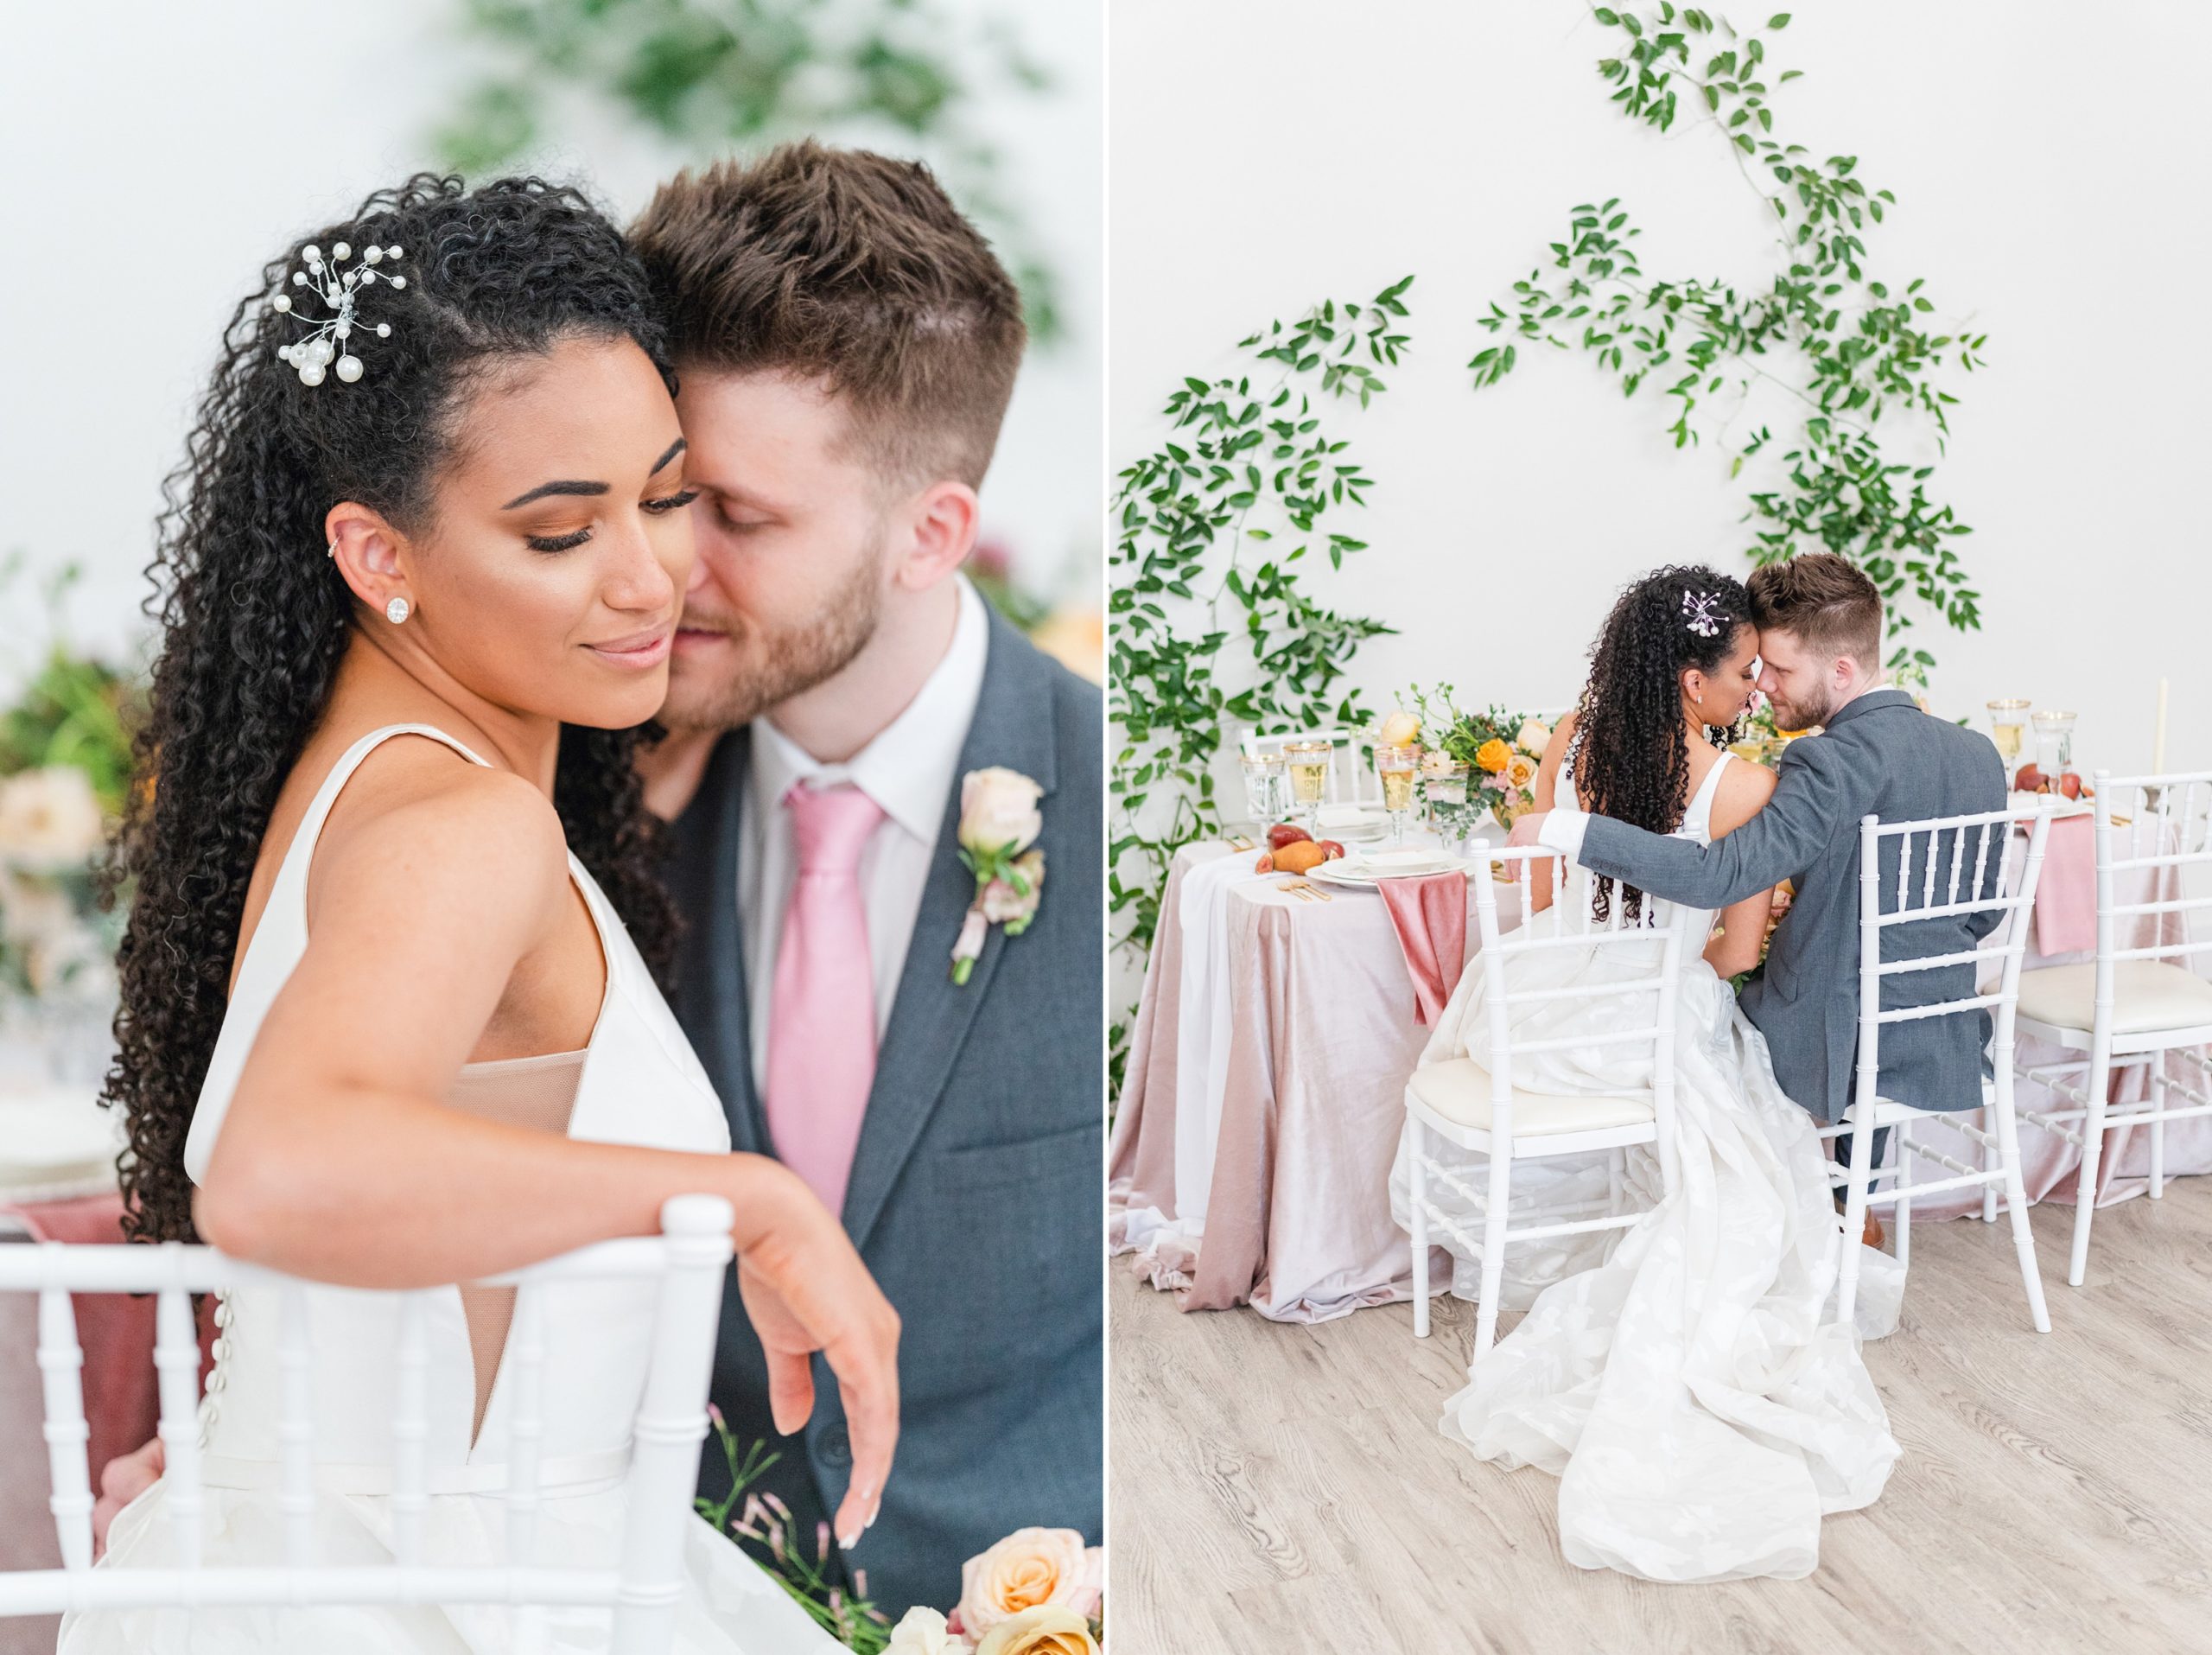 Bride-and-groom-at-reception-table-elegant-wedding